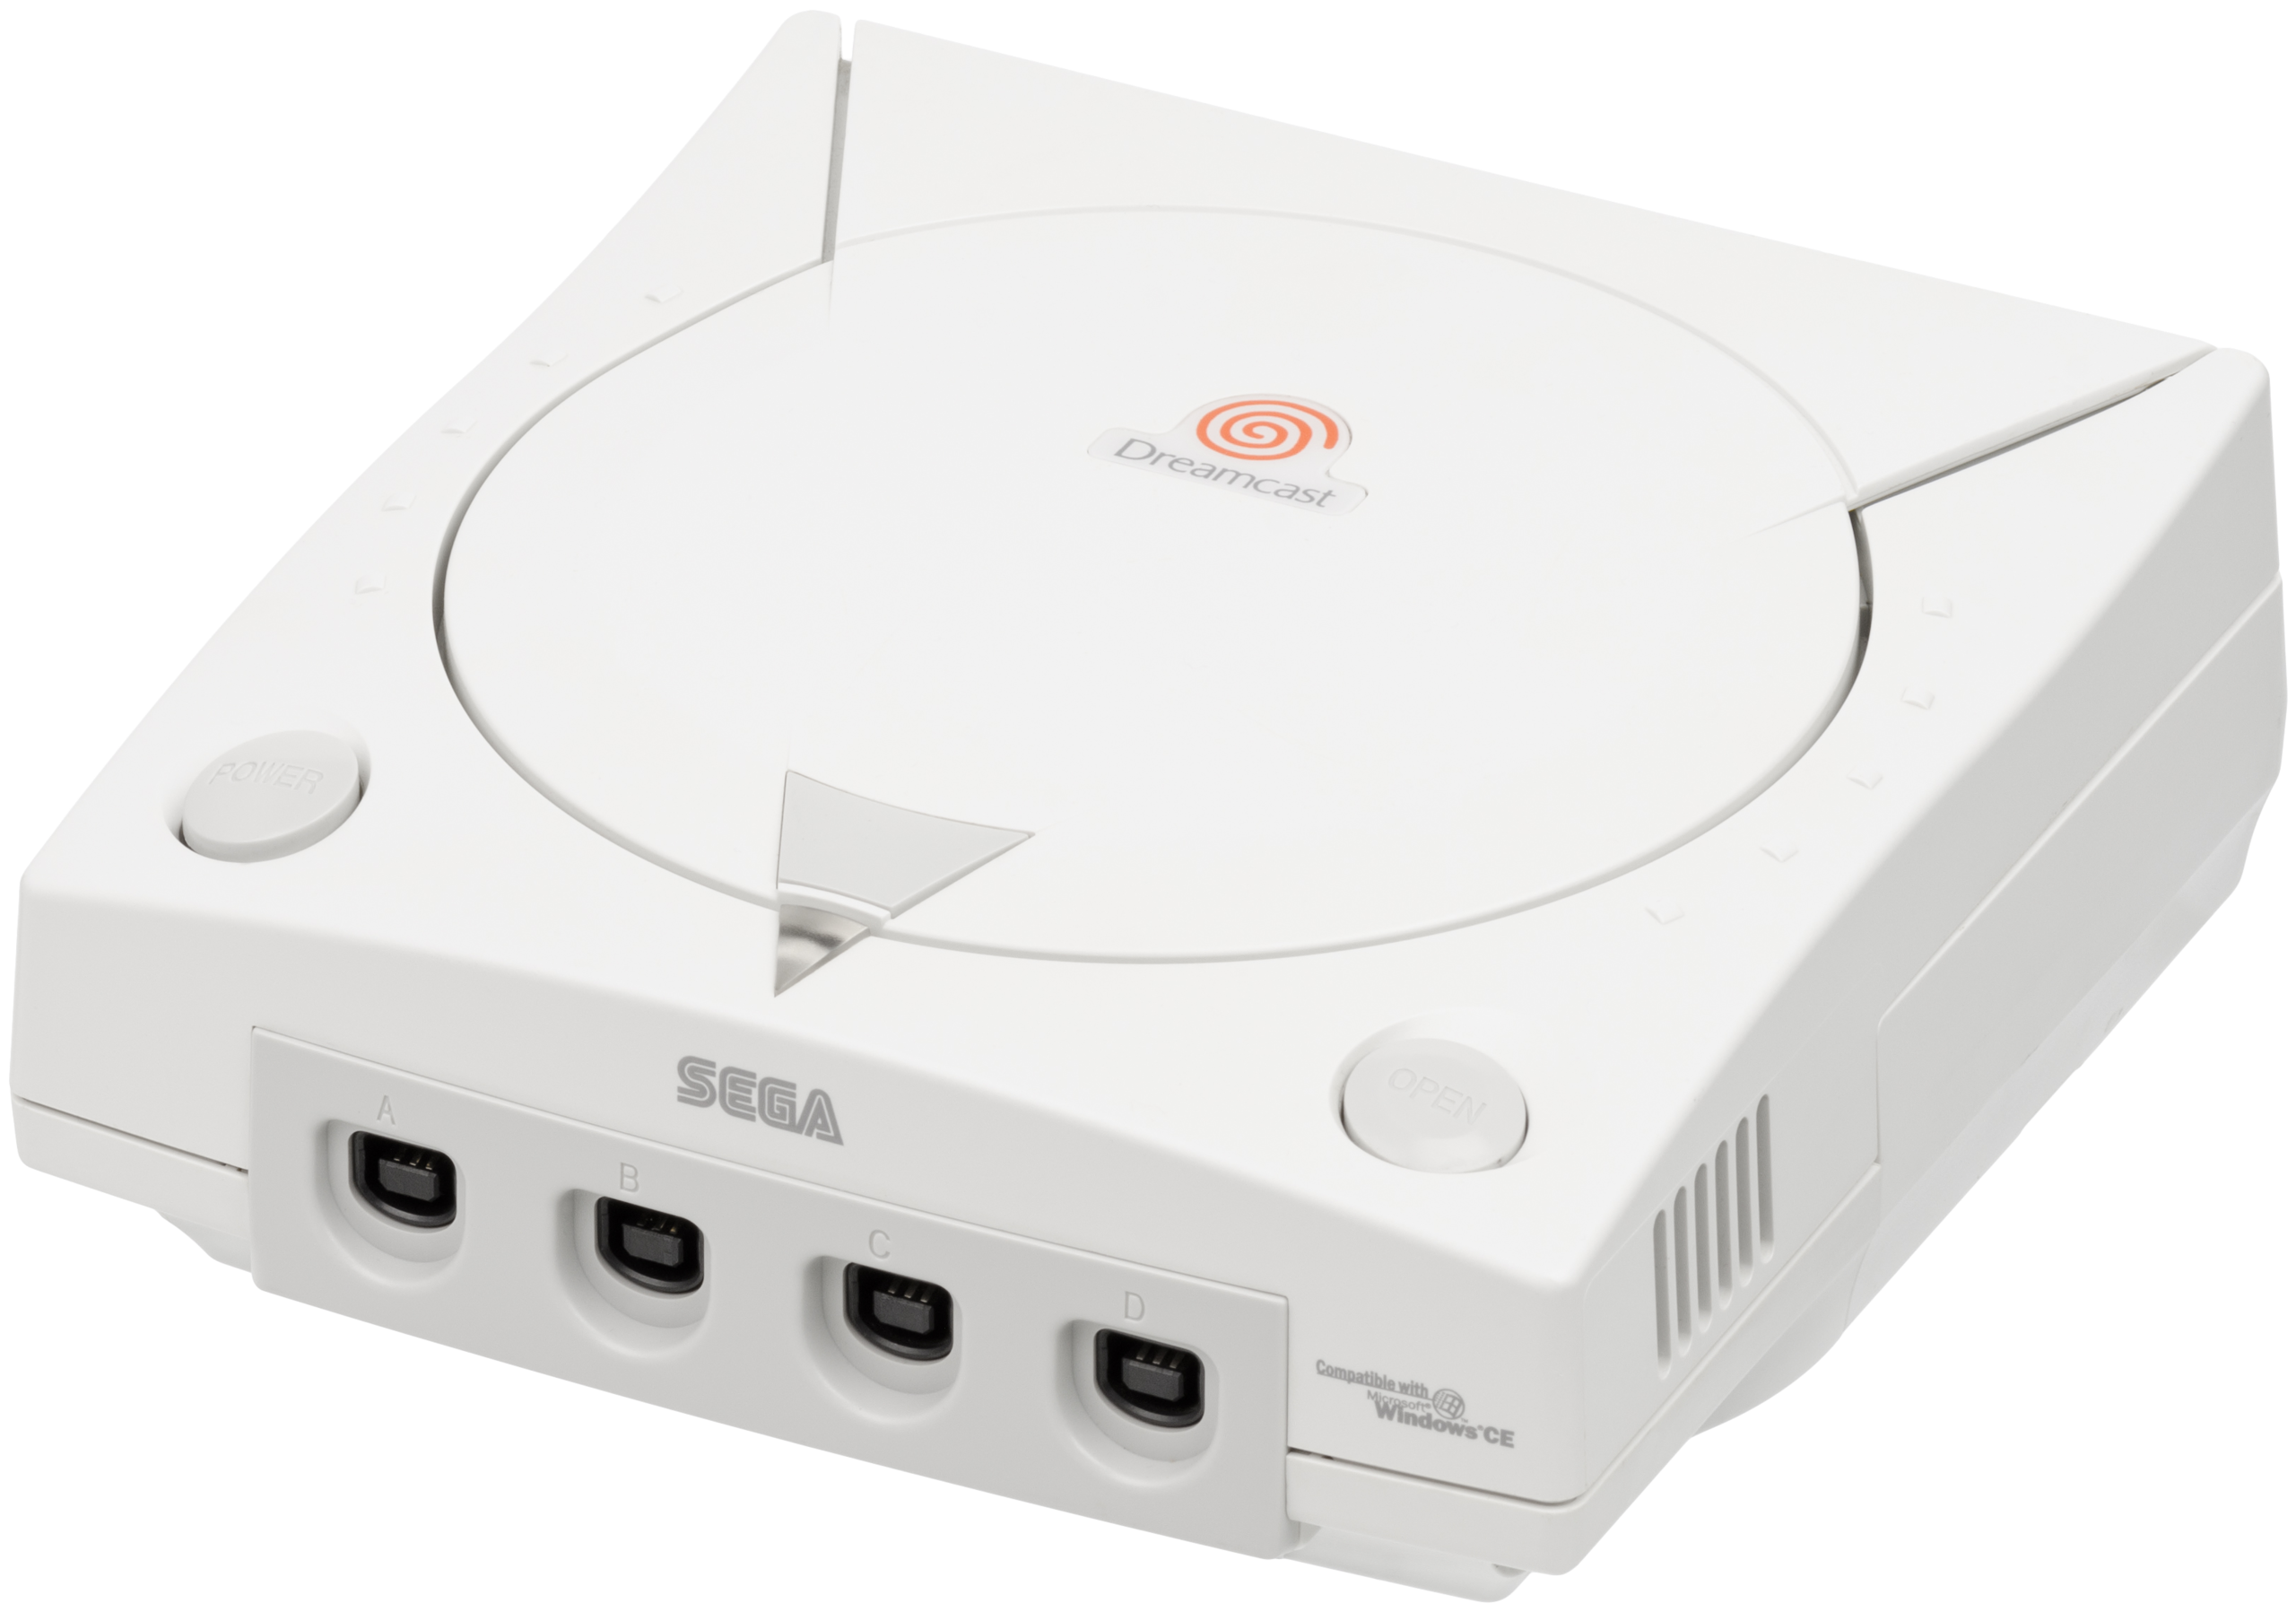 File:Sega-Dreamcast-Console-FL.png - Wikimedia Commons